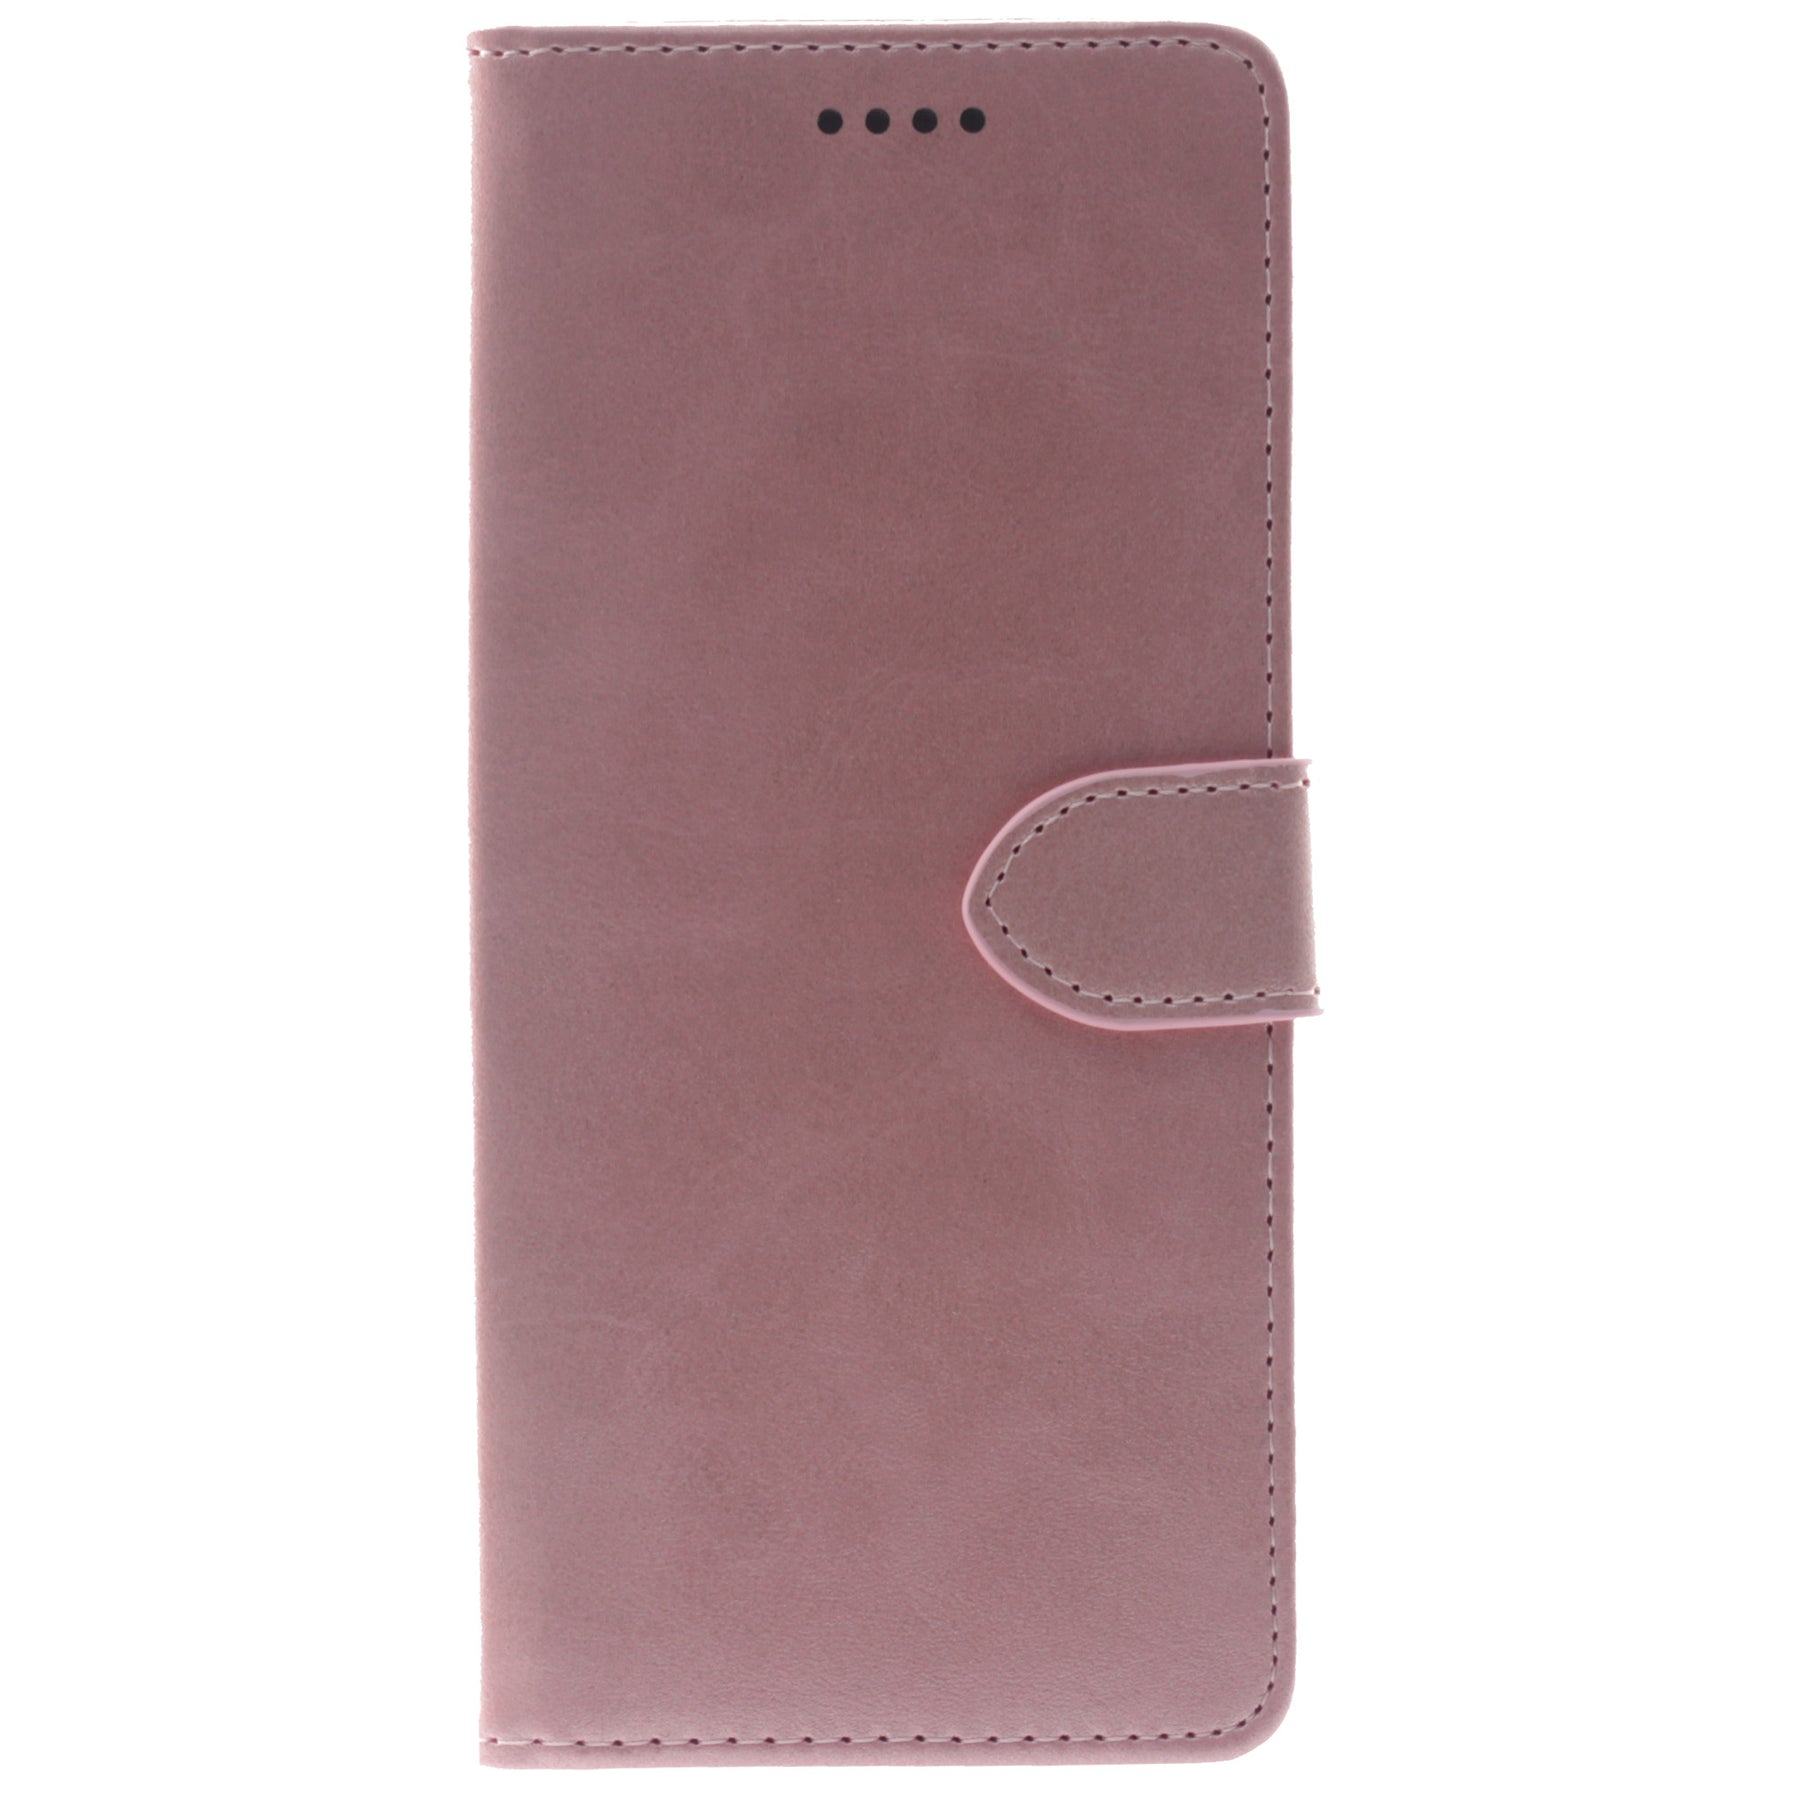 Nokia 5.3 pink wallet case